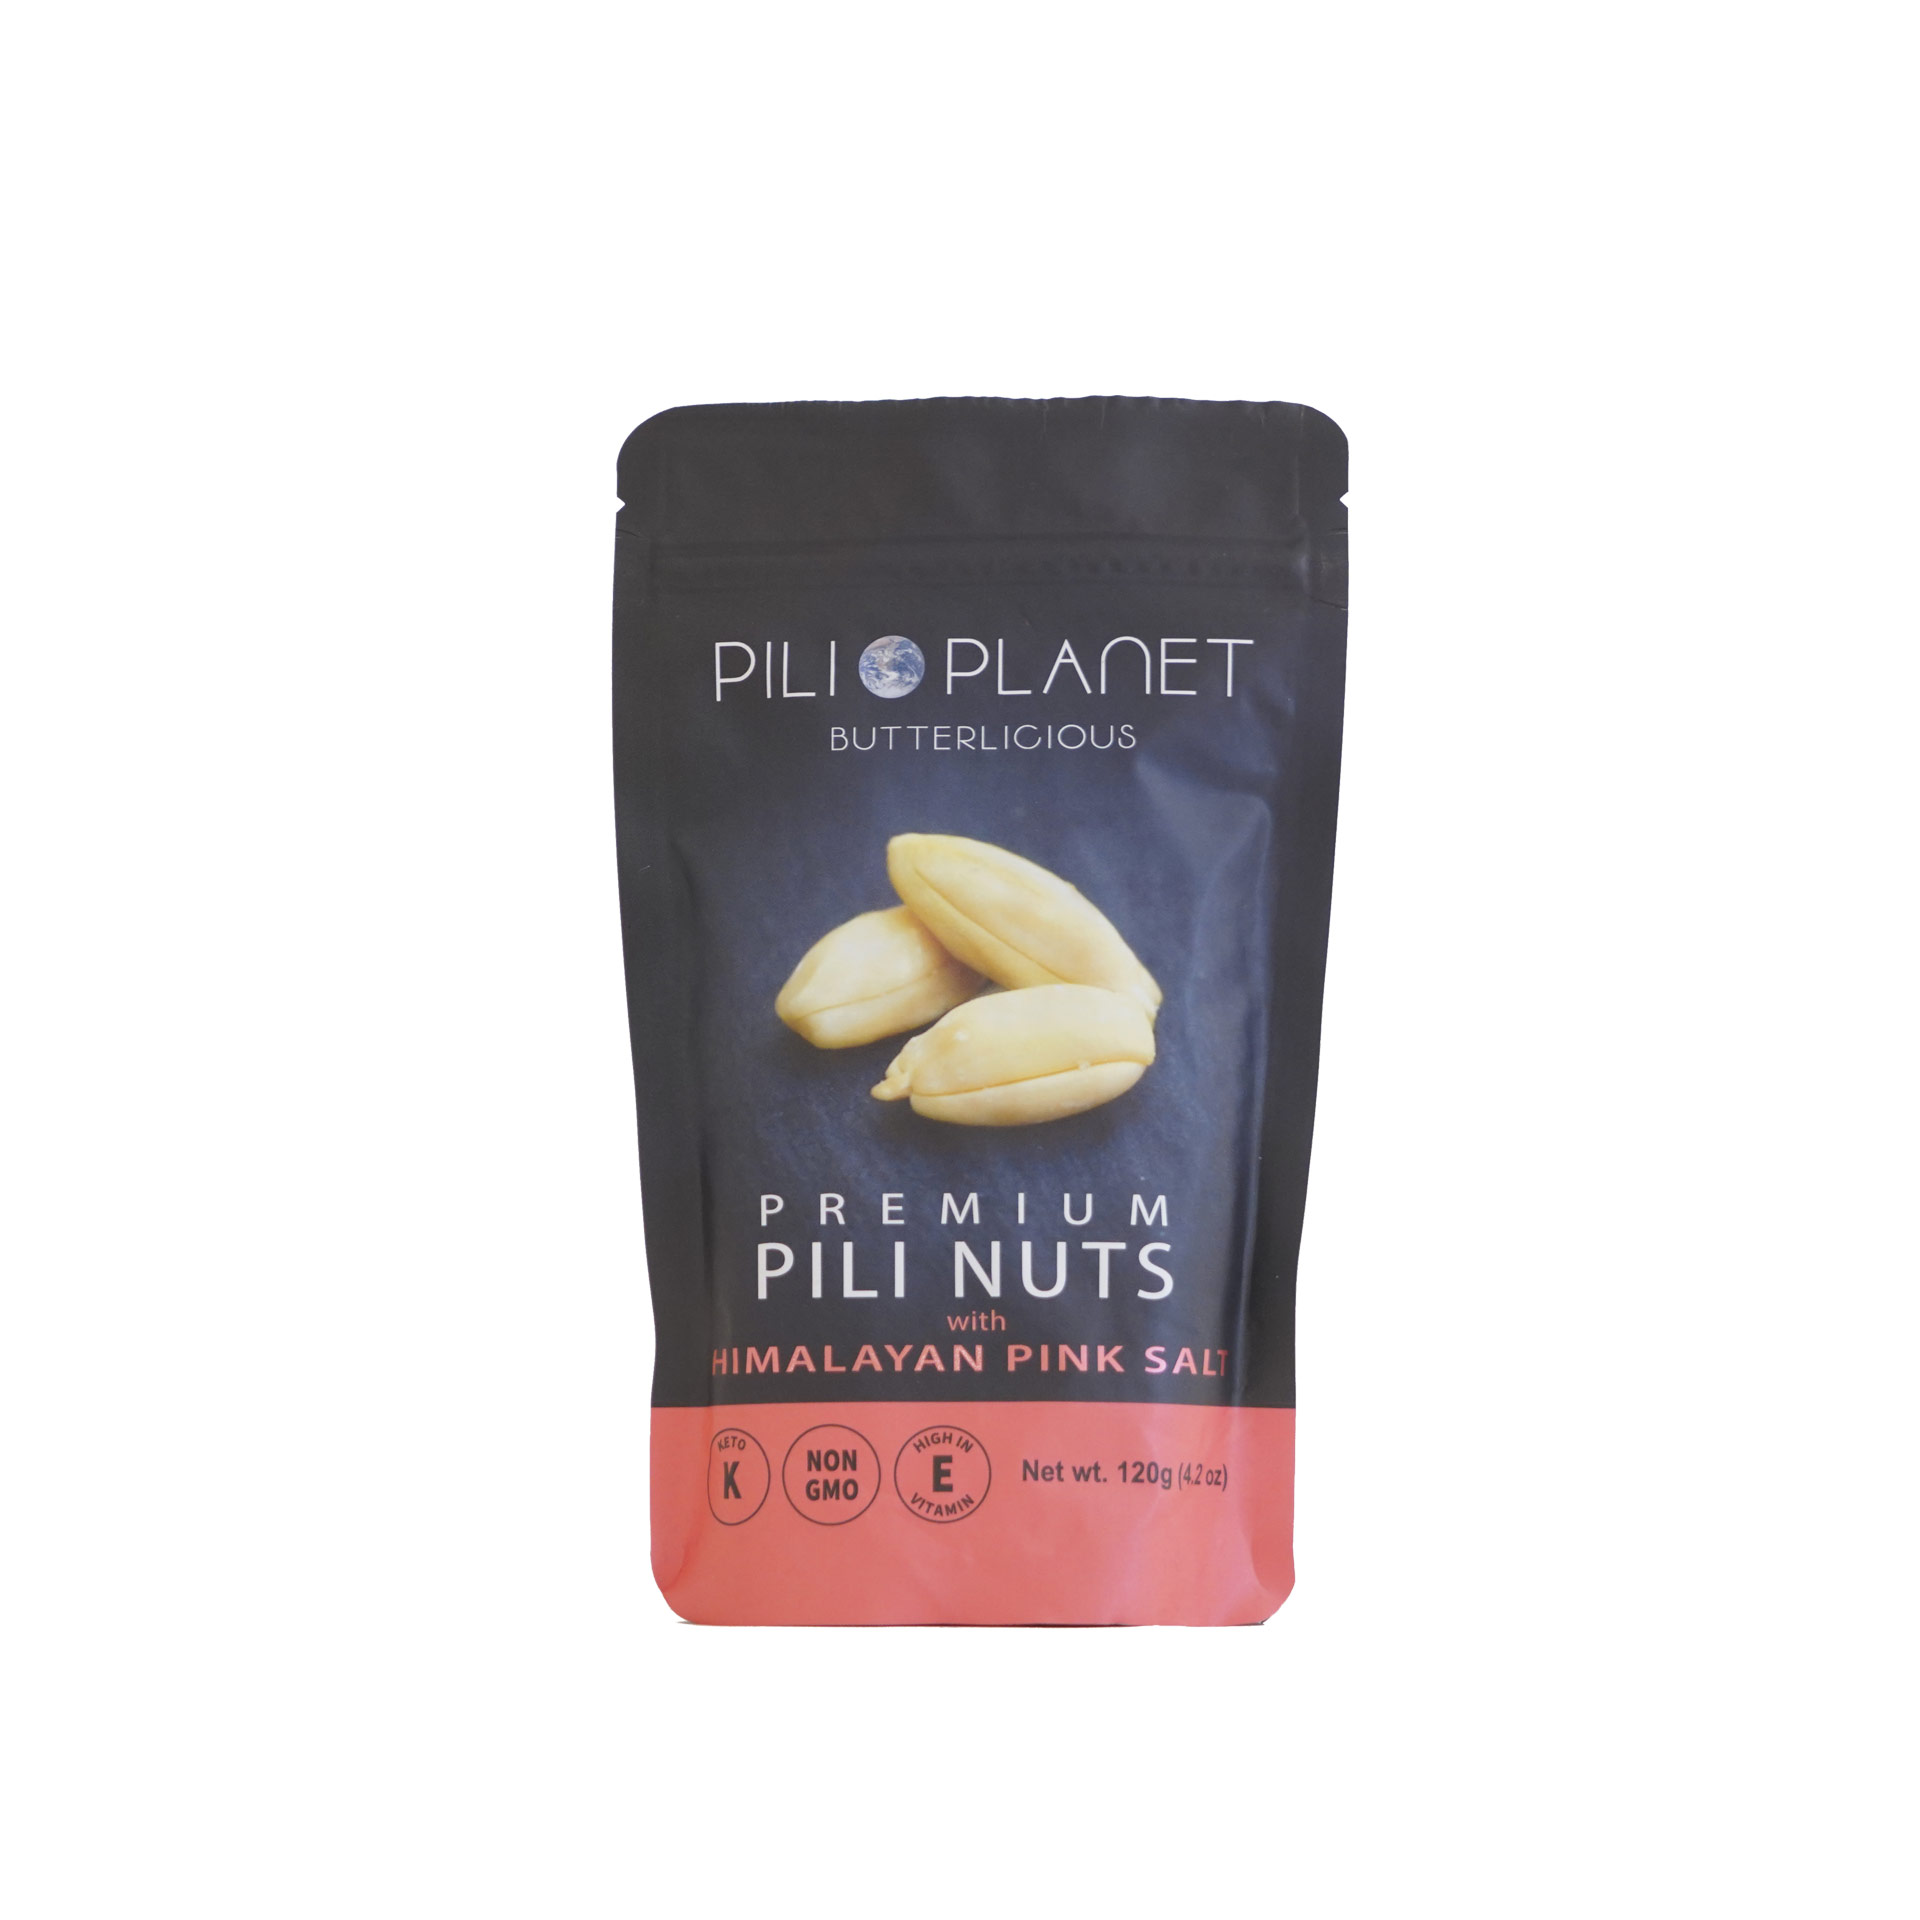 Pili Planet Premium Pili Nuts with Himalayan Pink Salt (120g)